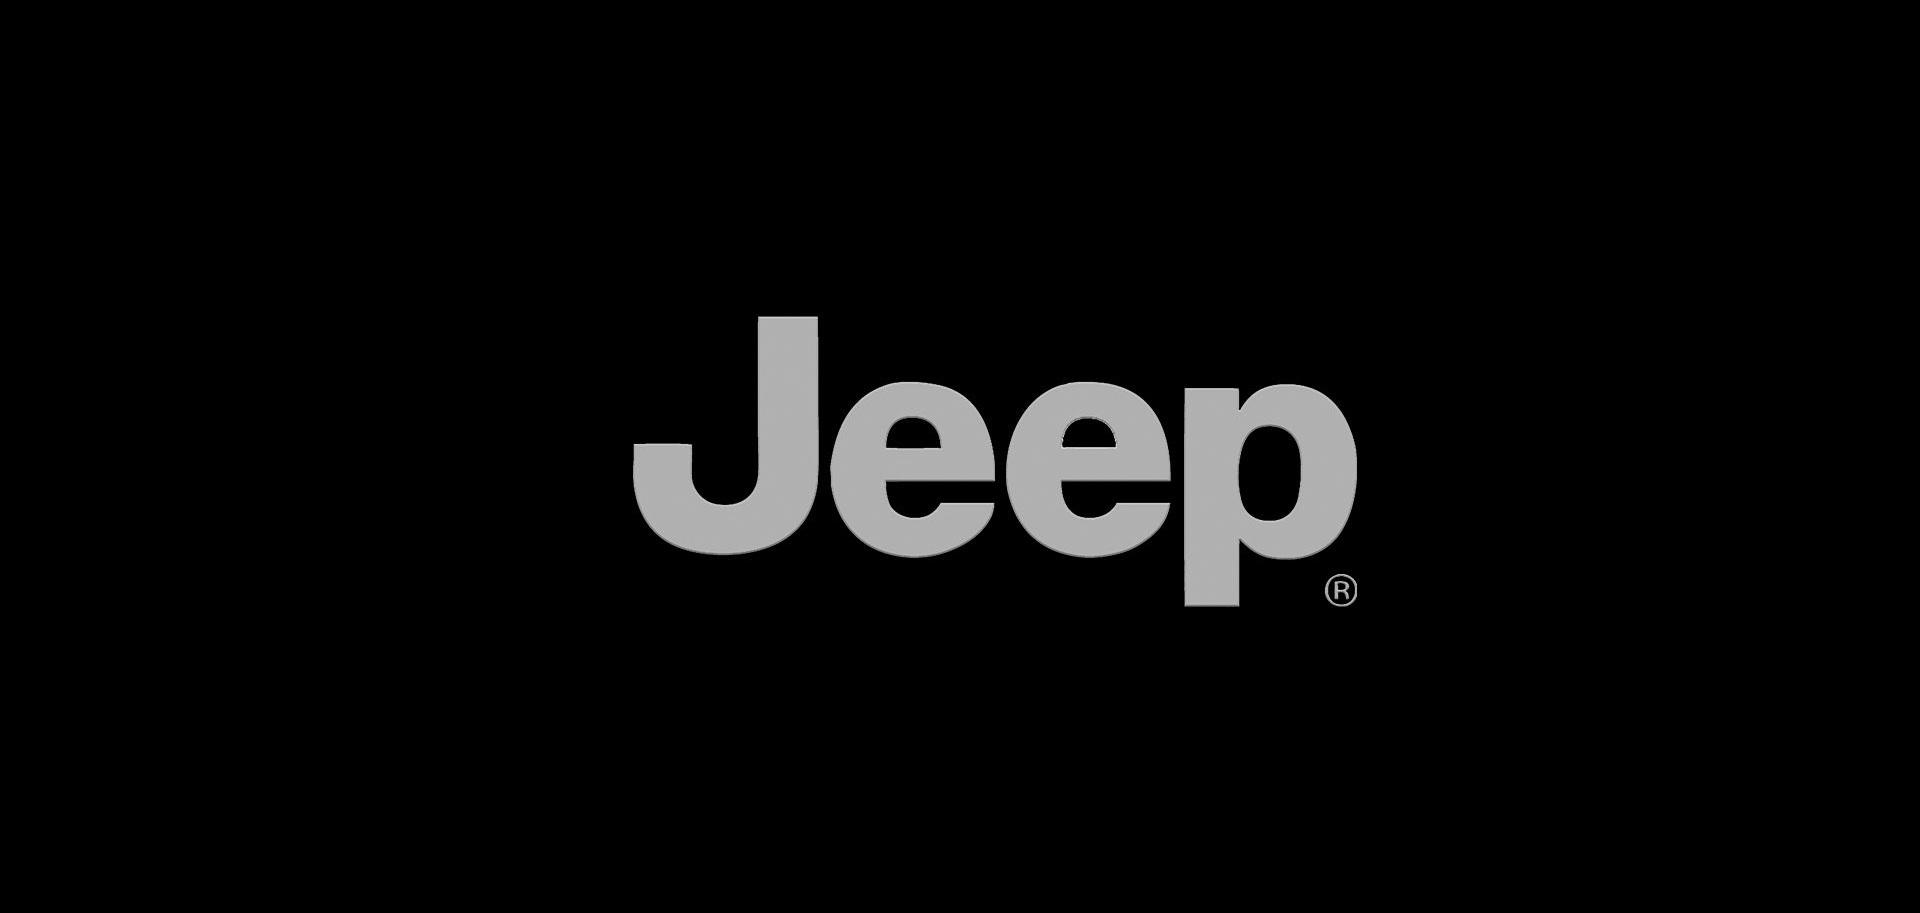 Jeep إعلان - الإعلانات الأكثر إبداعًا خلال 2020